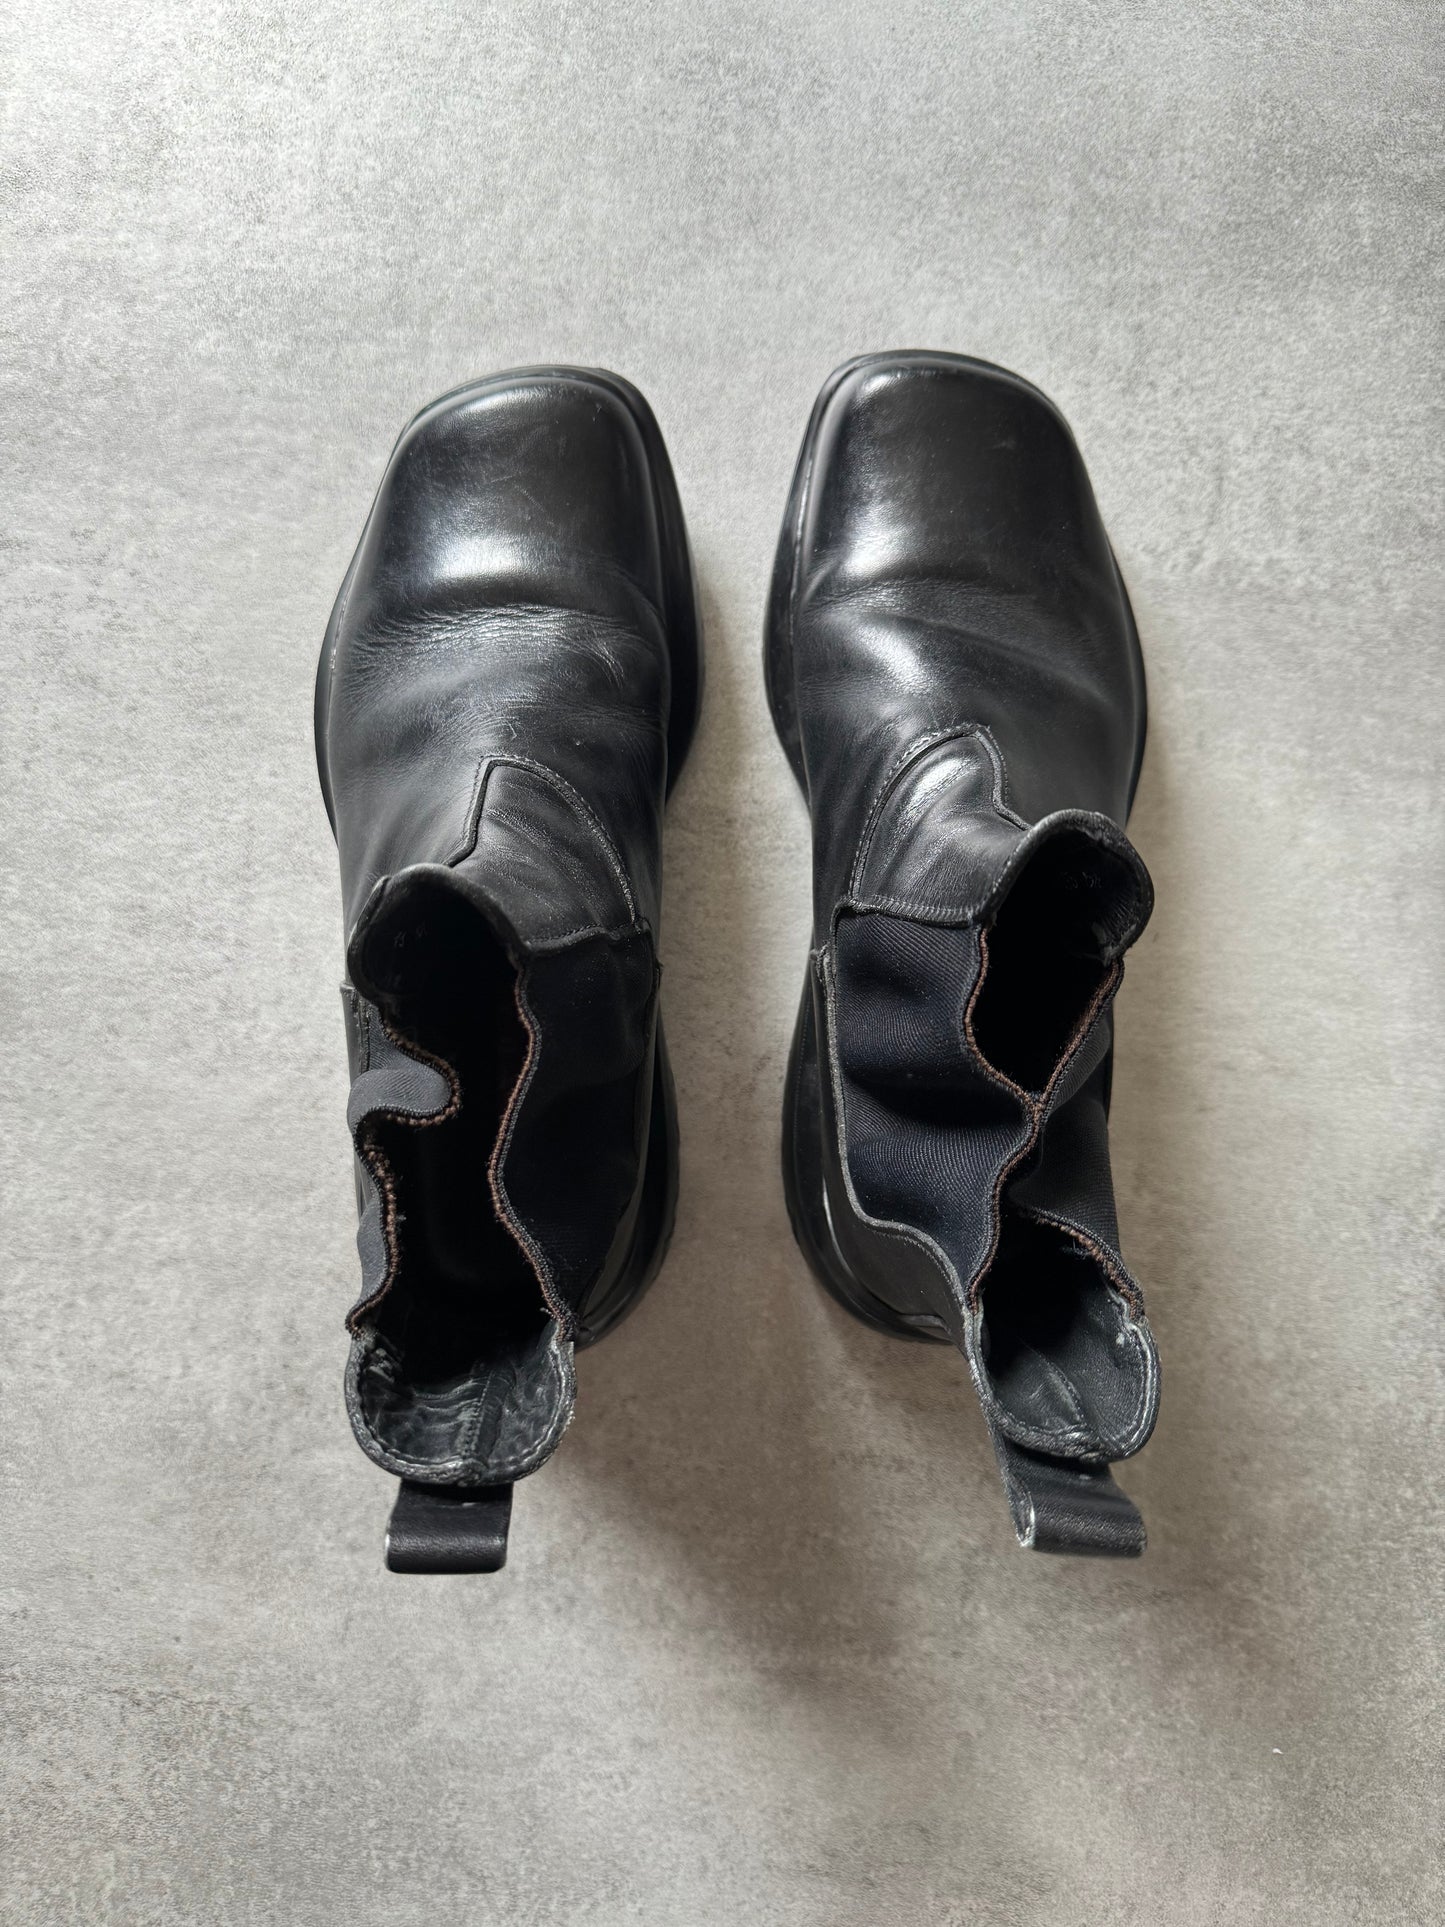 FW1999 Prada Black Leather Boots (40) - 2